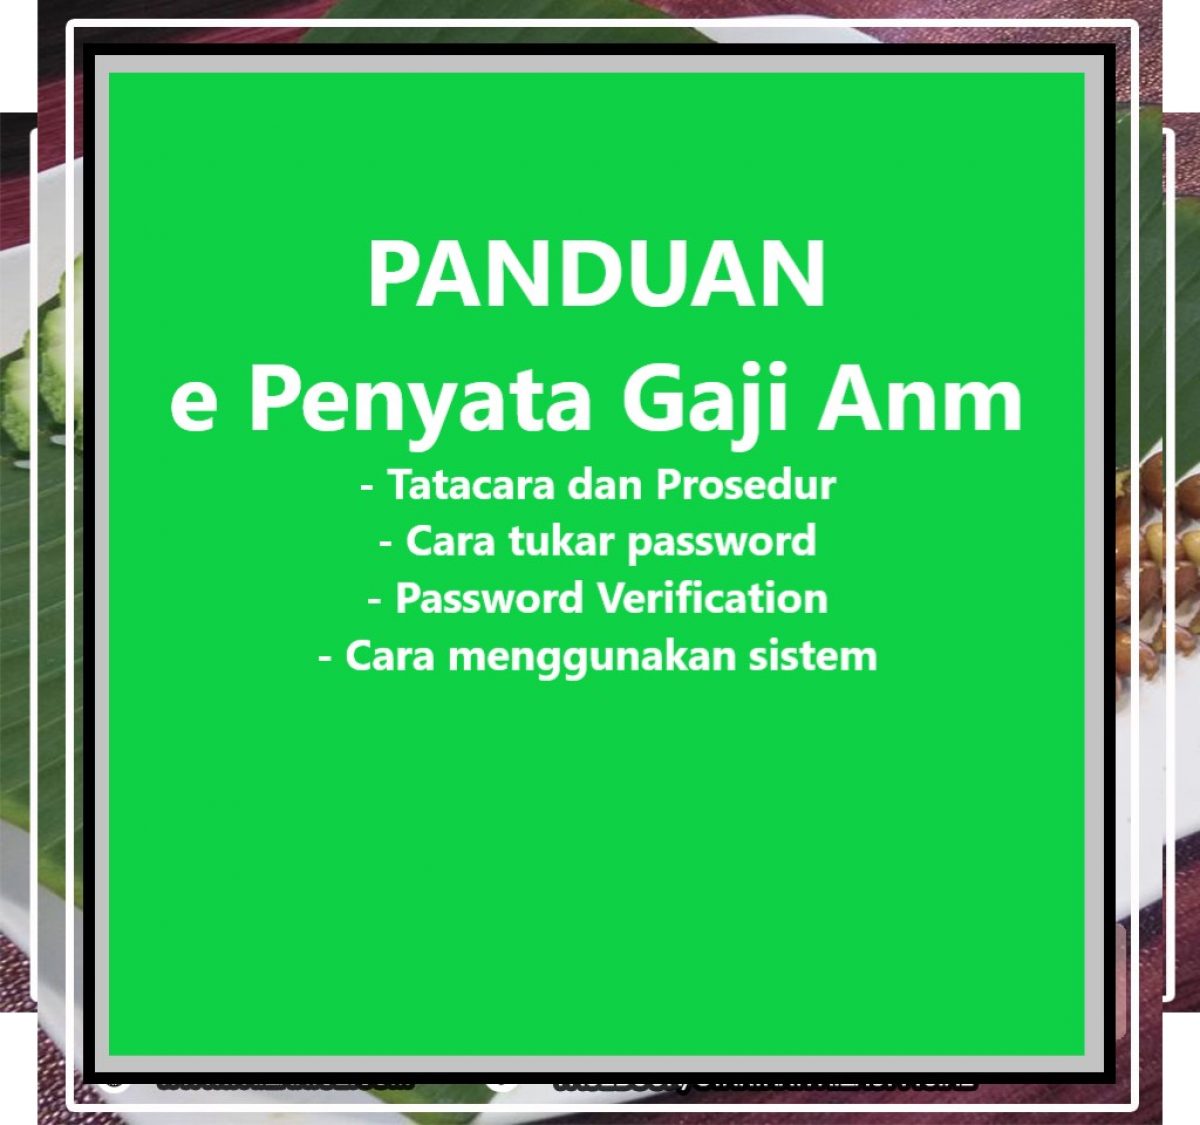 Online www.anm.gov.my e-penyata gaji